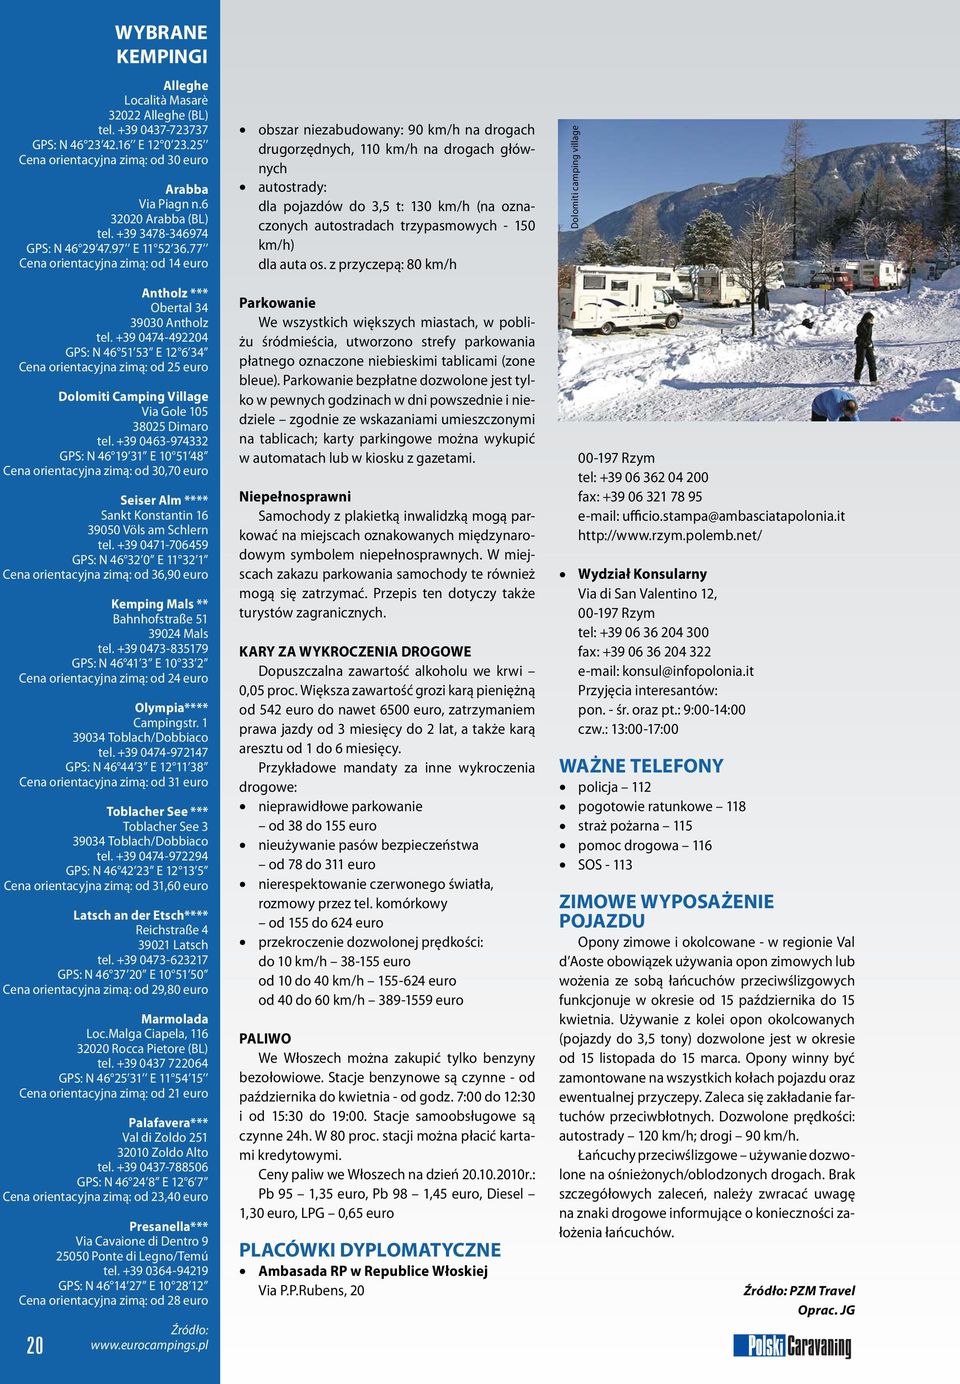 +39 0474-492204 GPS: N 46 51 53 E 12 6 34 Cena orientacyjna zimą: od 25 euro Dolomiti Camping Village Via Gole 105 38025 Dimaro tel.